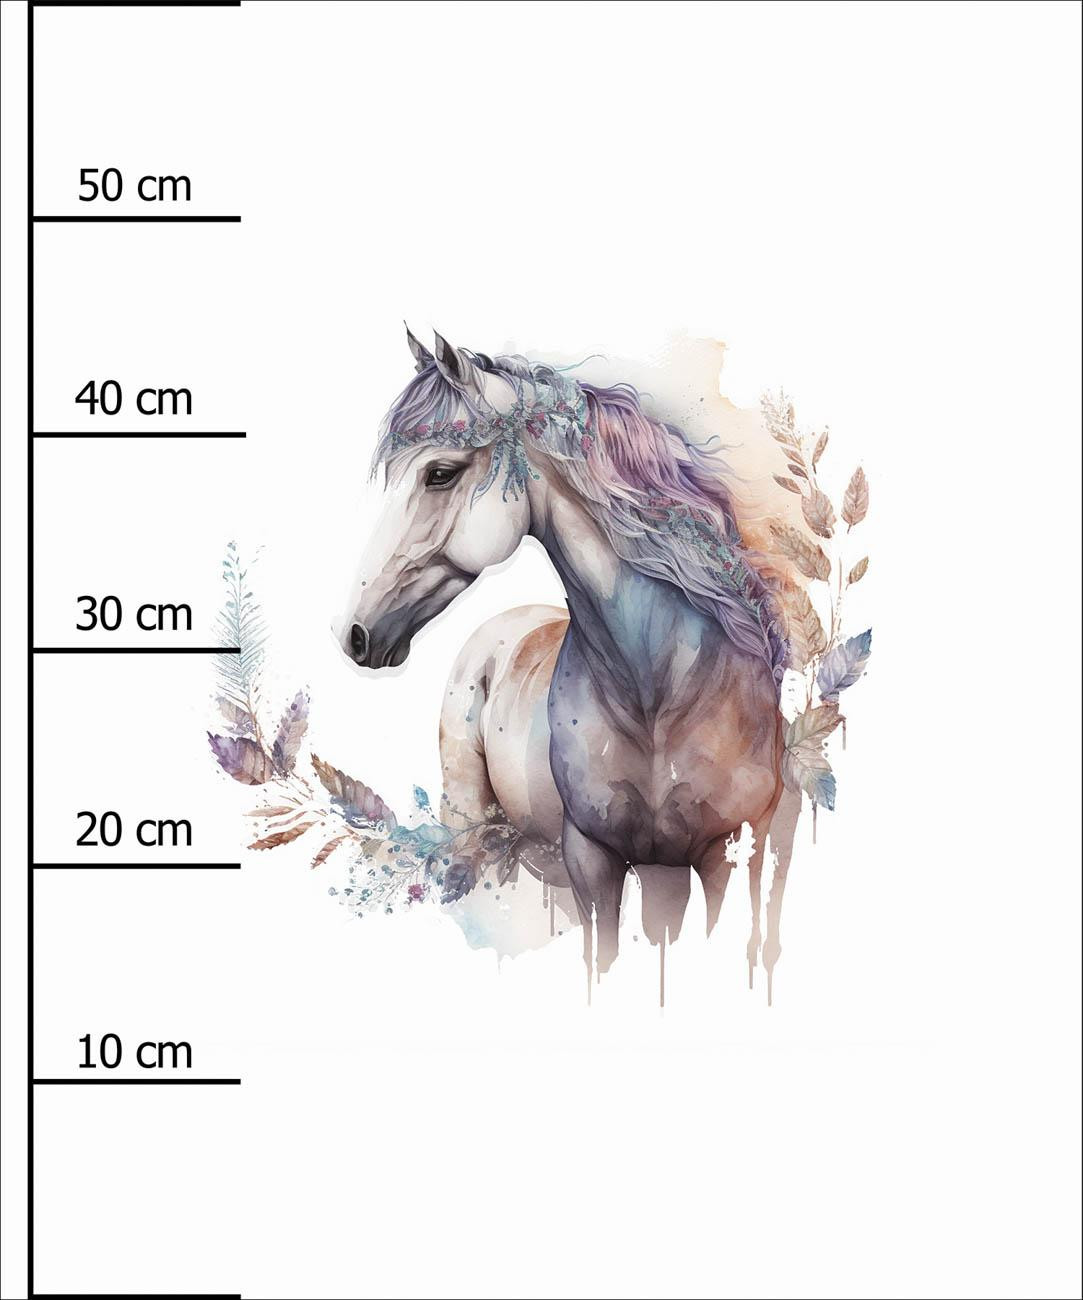 WATERCOLOR HORSE - Paneel (60cm x 50cm) Thermo lycra